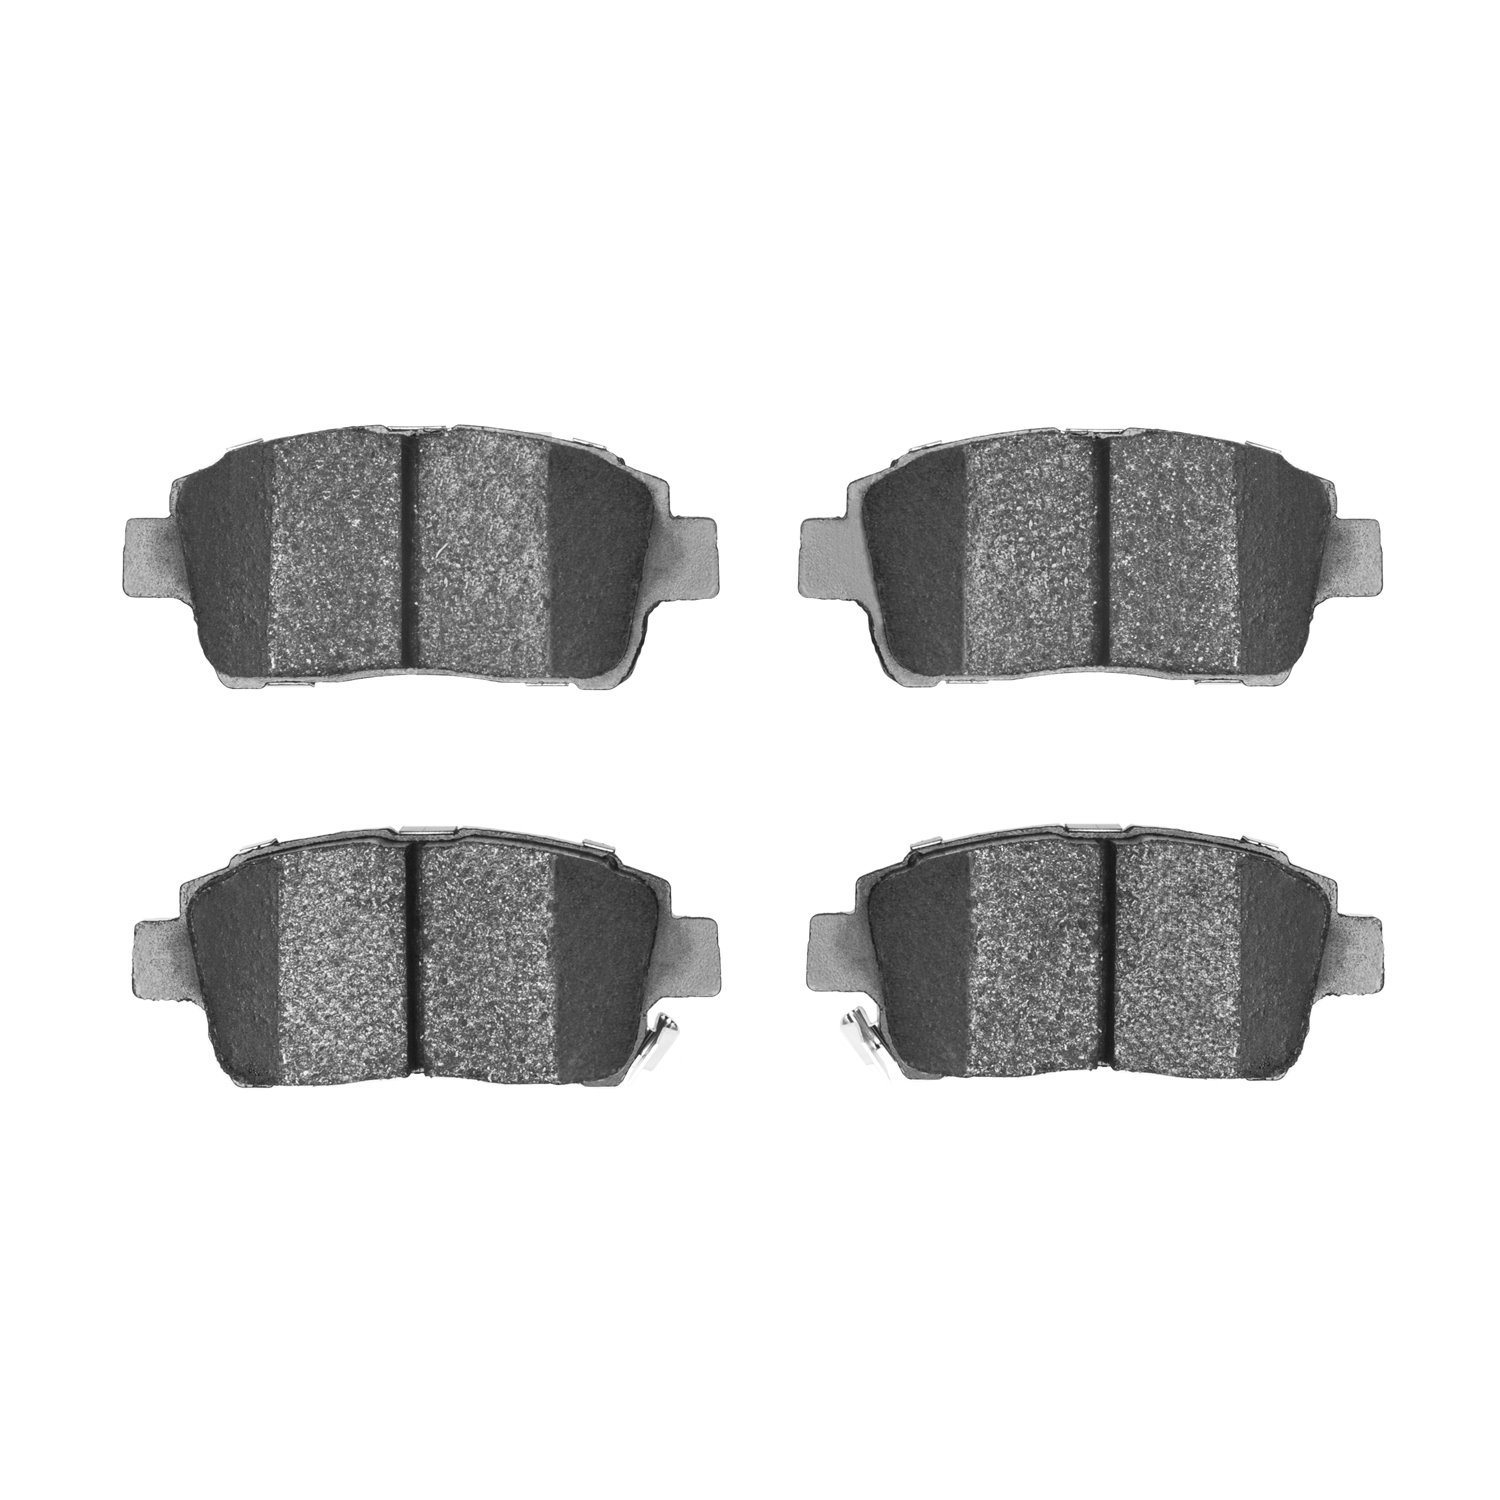 1310-0822-00 3000-Series Ceramic Brake Pads, 2000-2015 Multiple Makes/Models, Position: Front